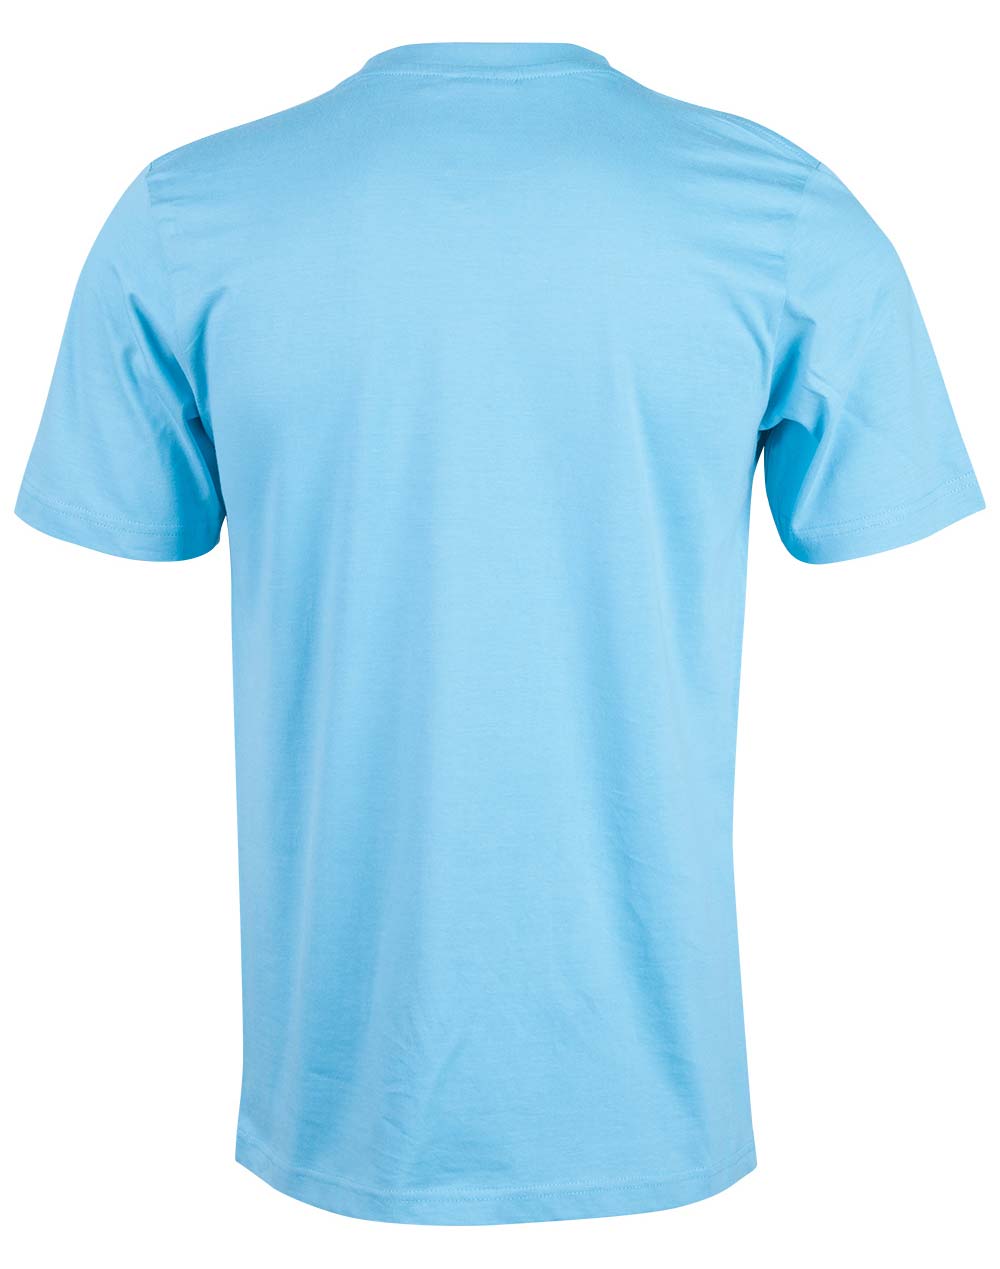 Custom (Fluoro Yellow) Semi-Fitted T-Shirts Men's Cotton Online in Perth Australia